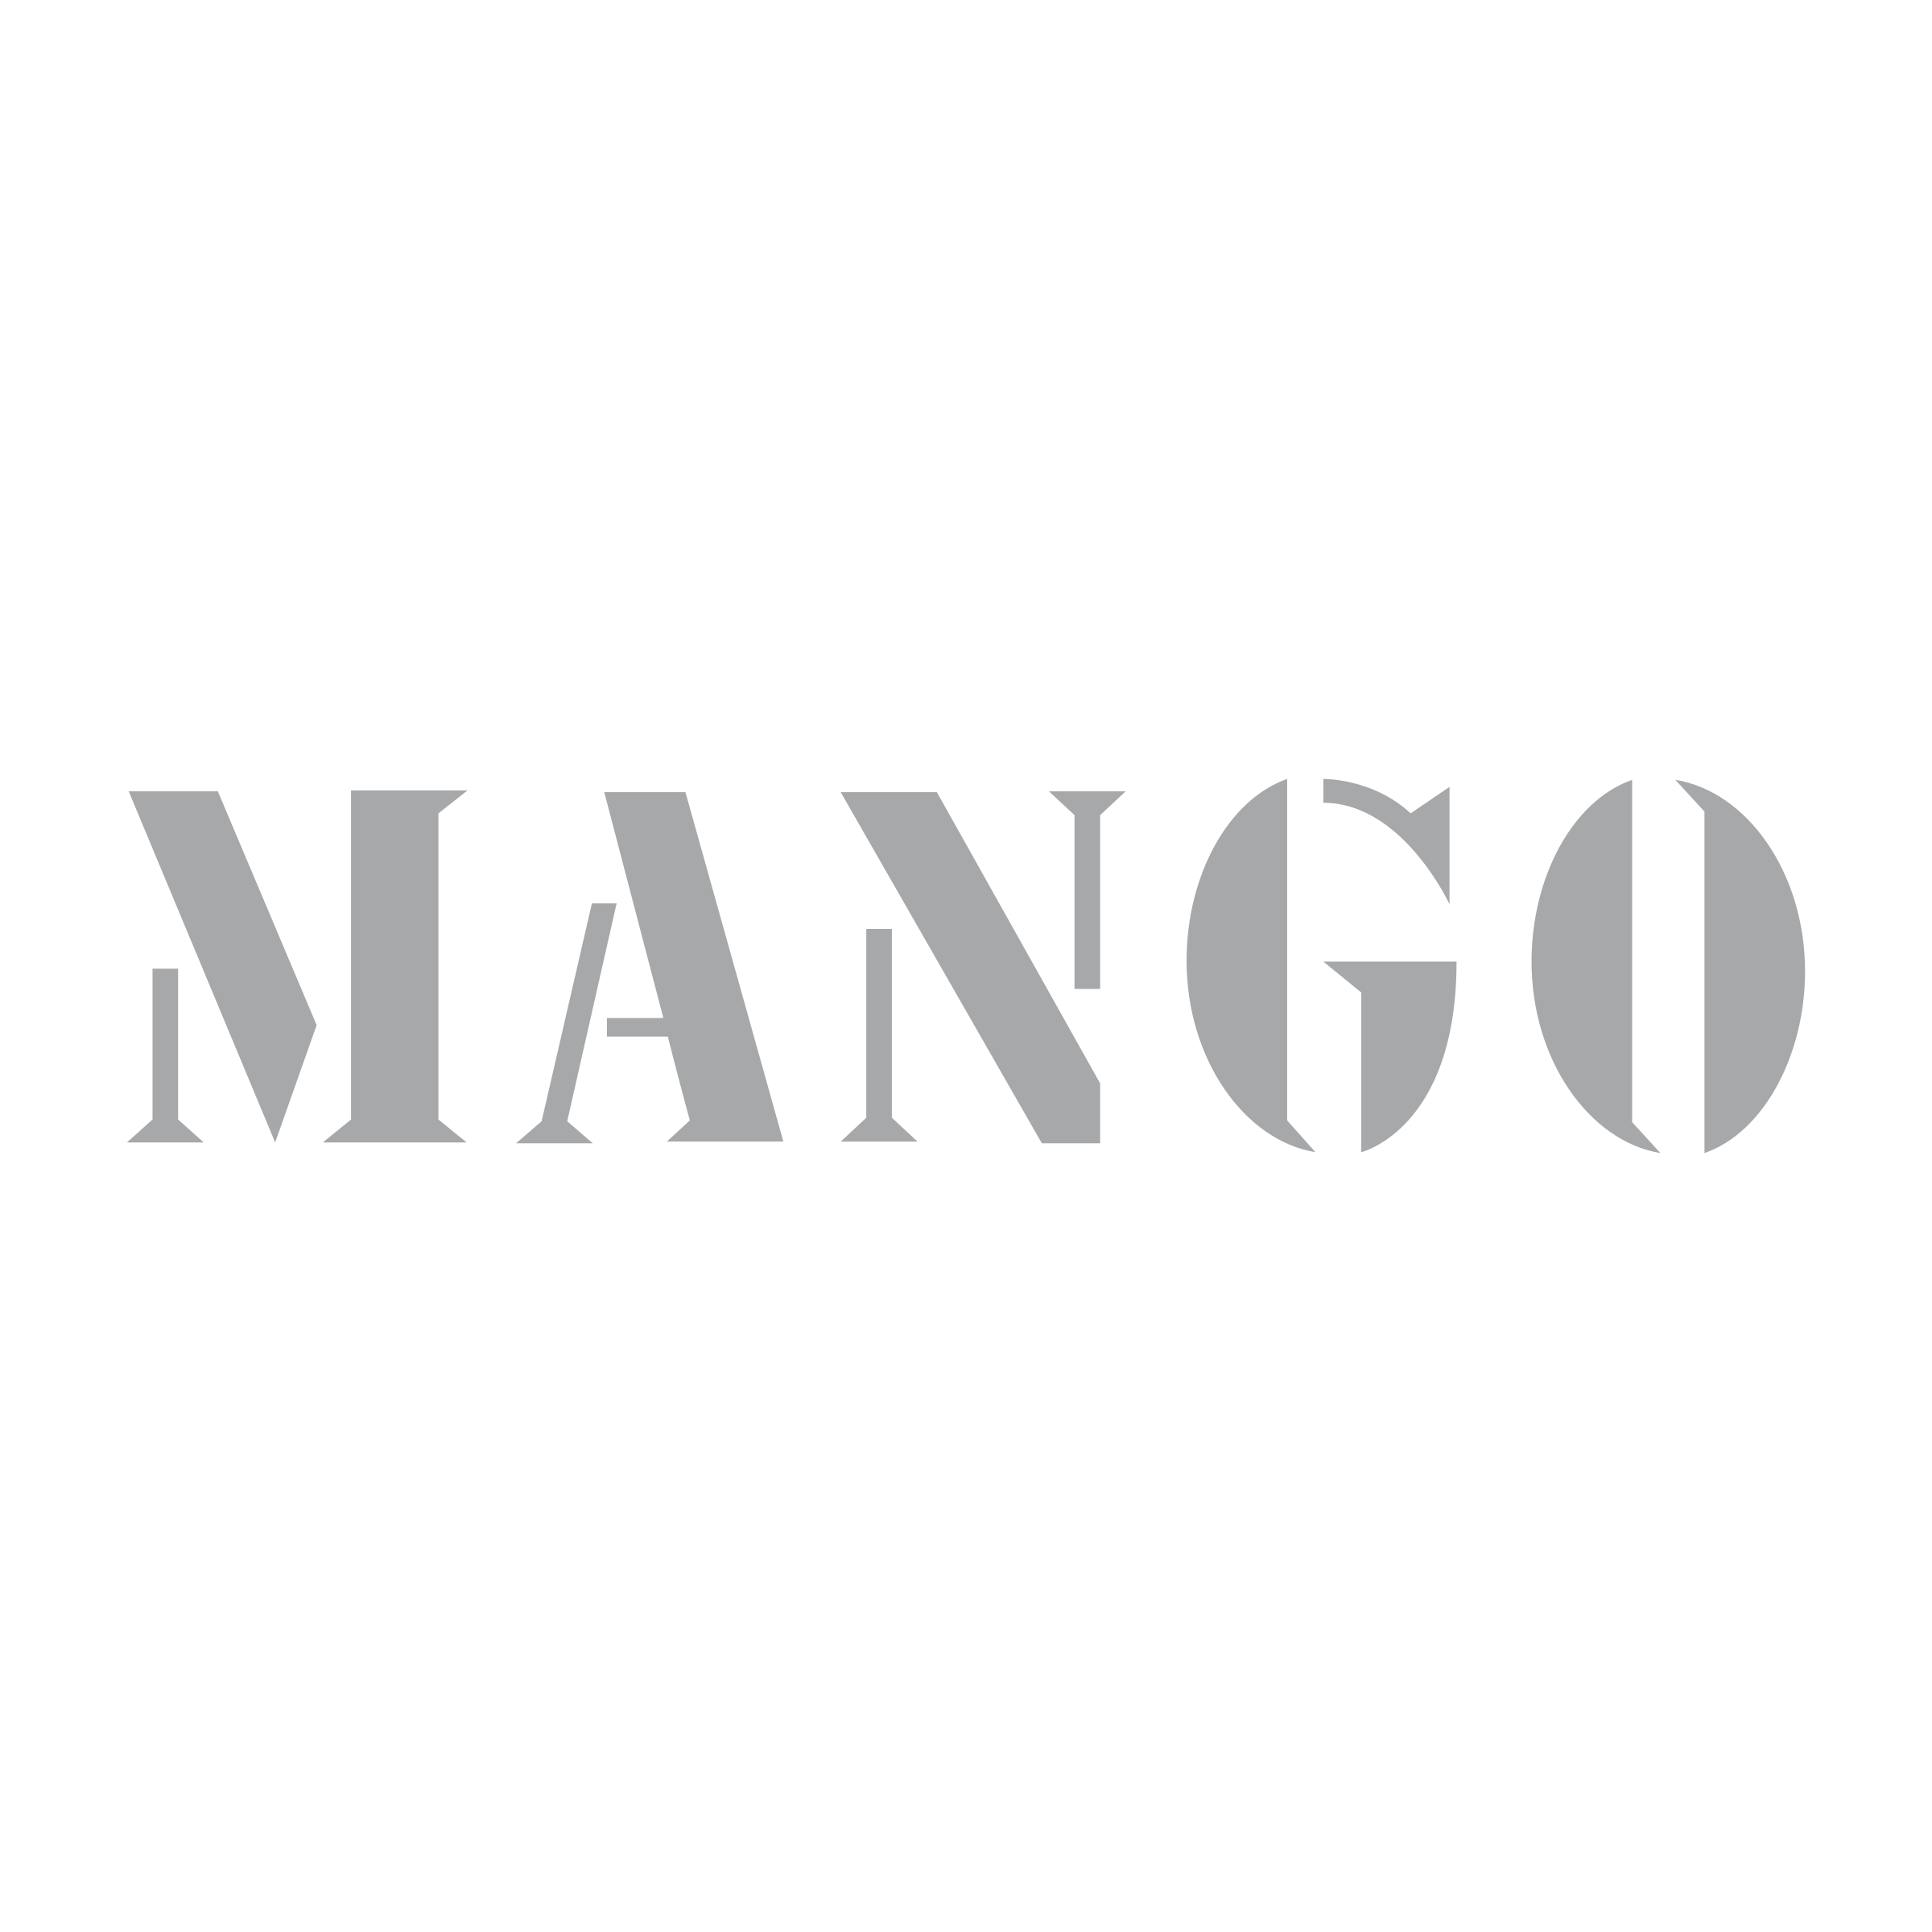 Mango Fruit Brand - Mango Png